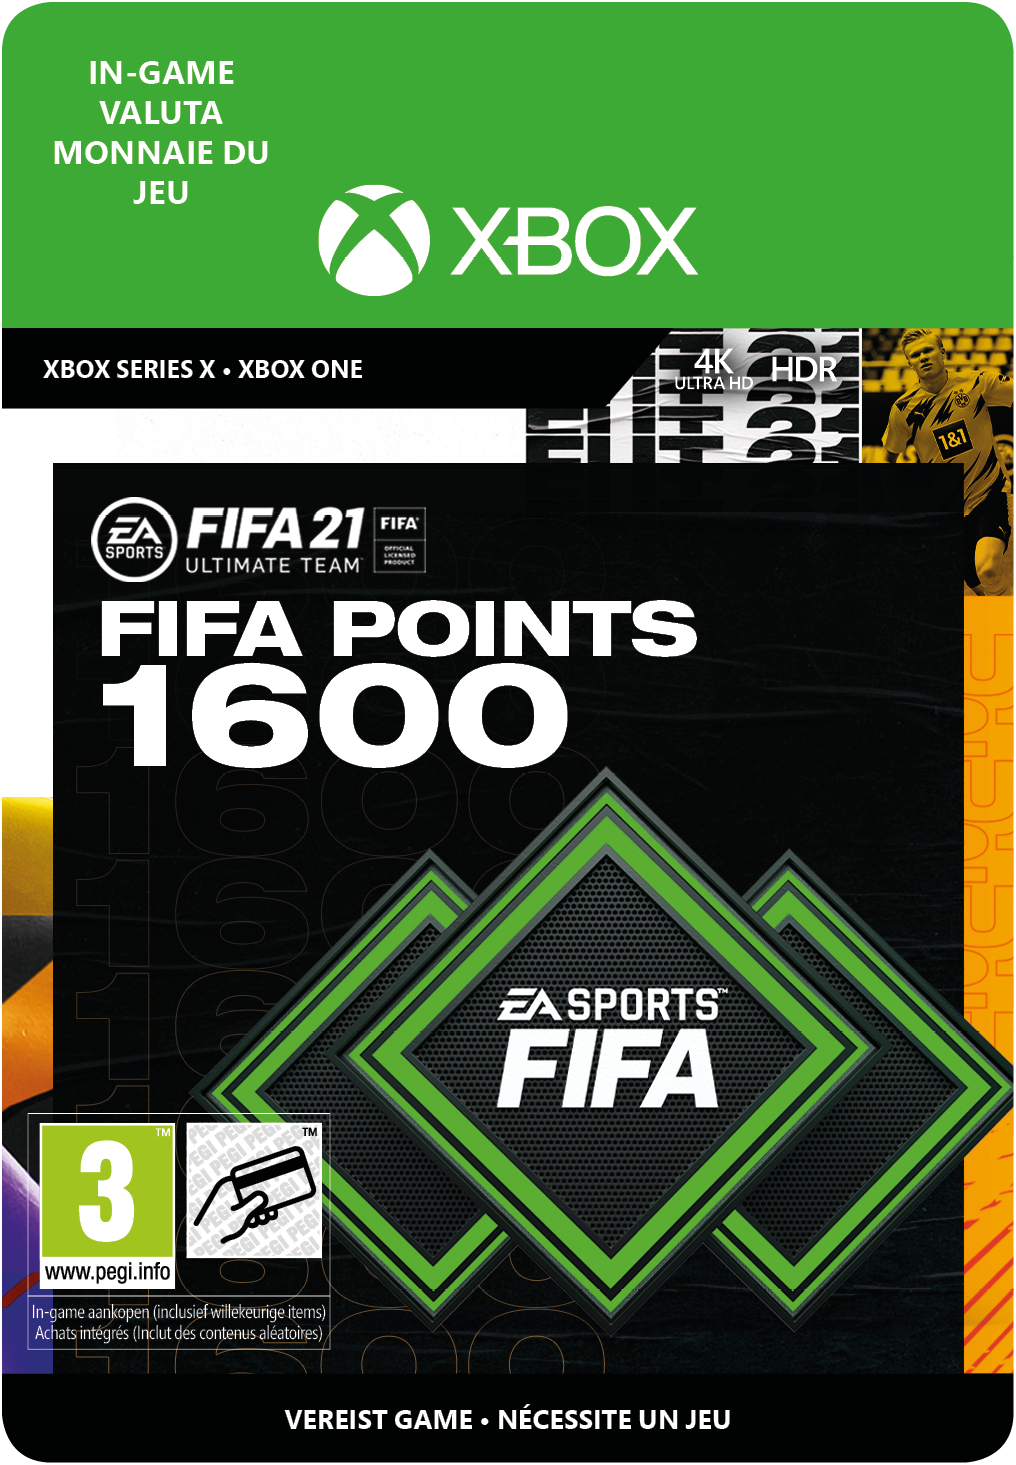 1600 Xbox FIFA 21 Points